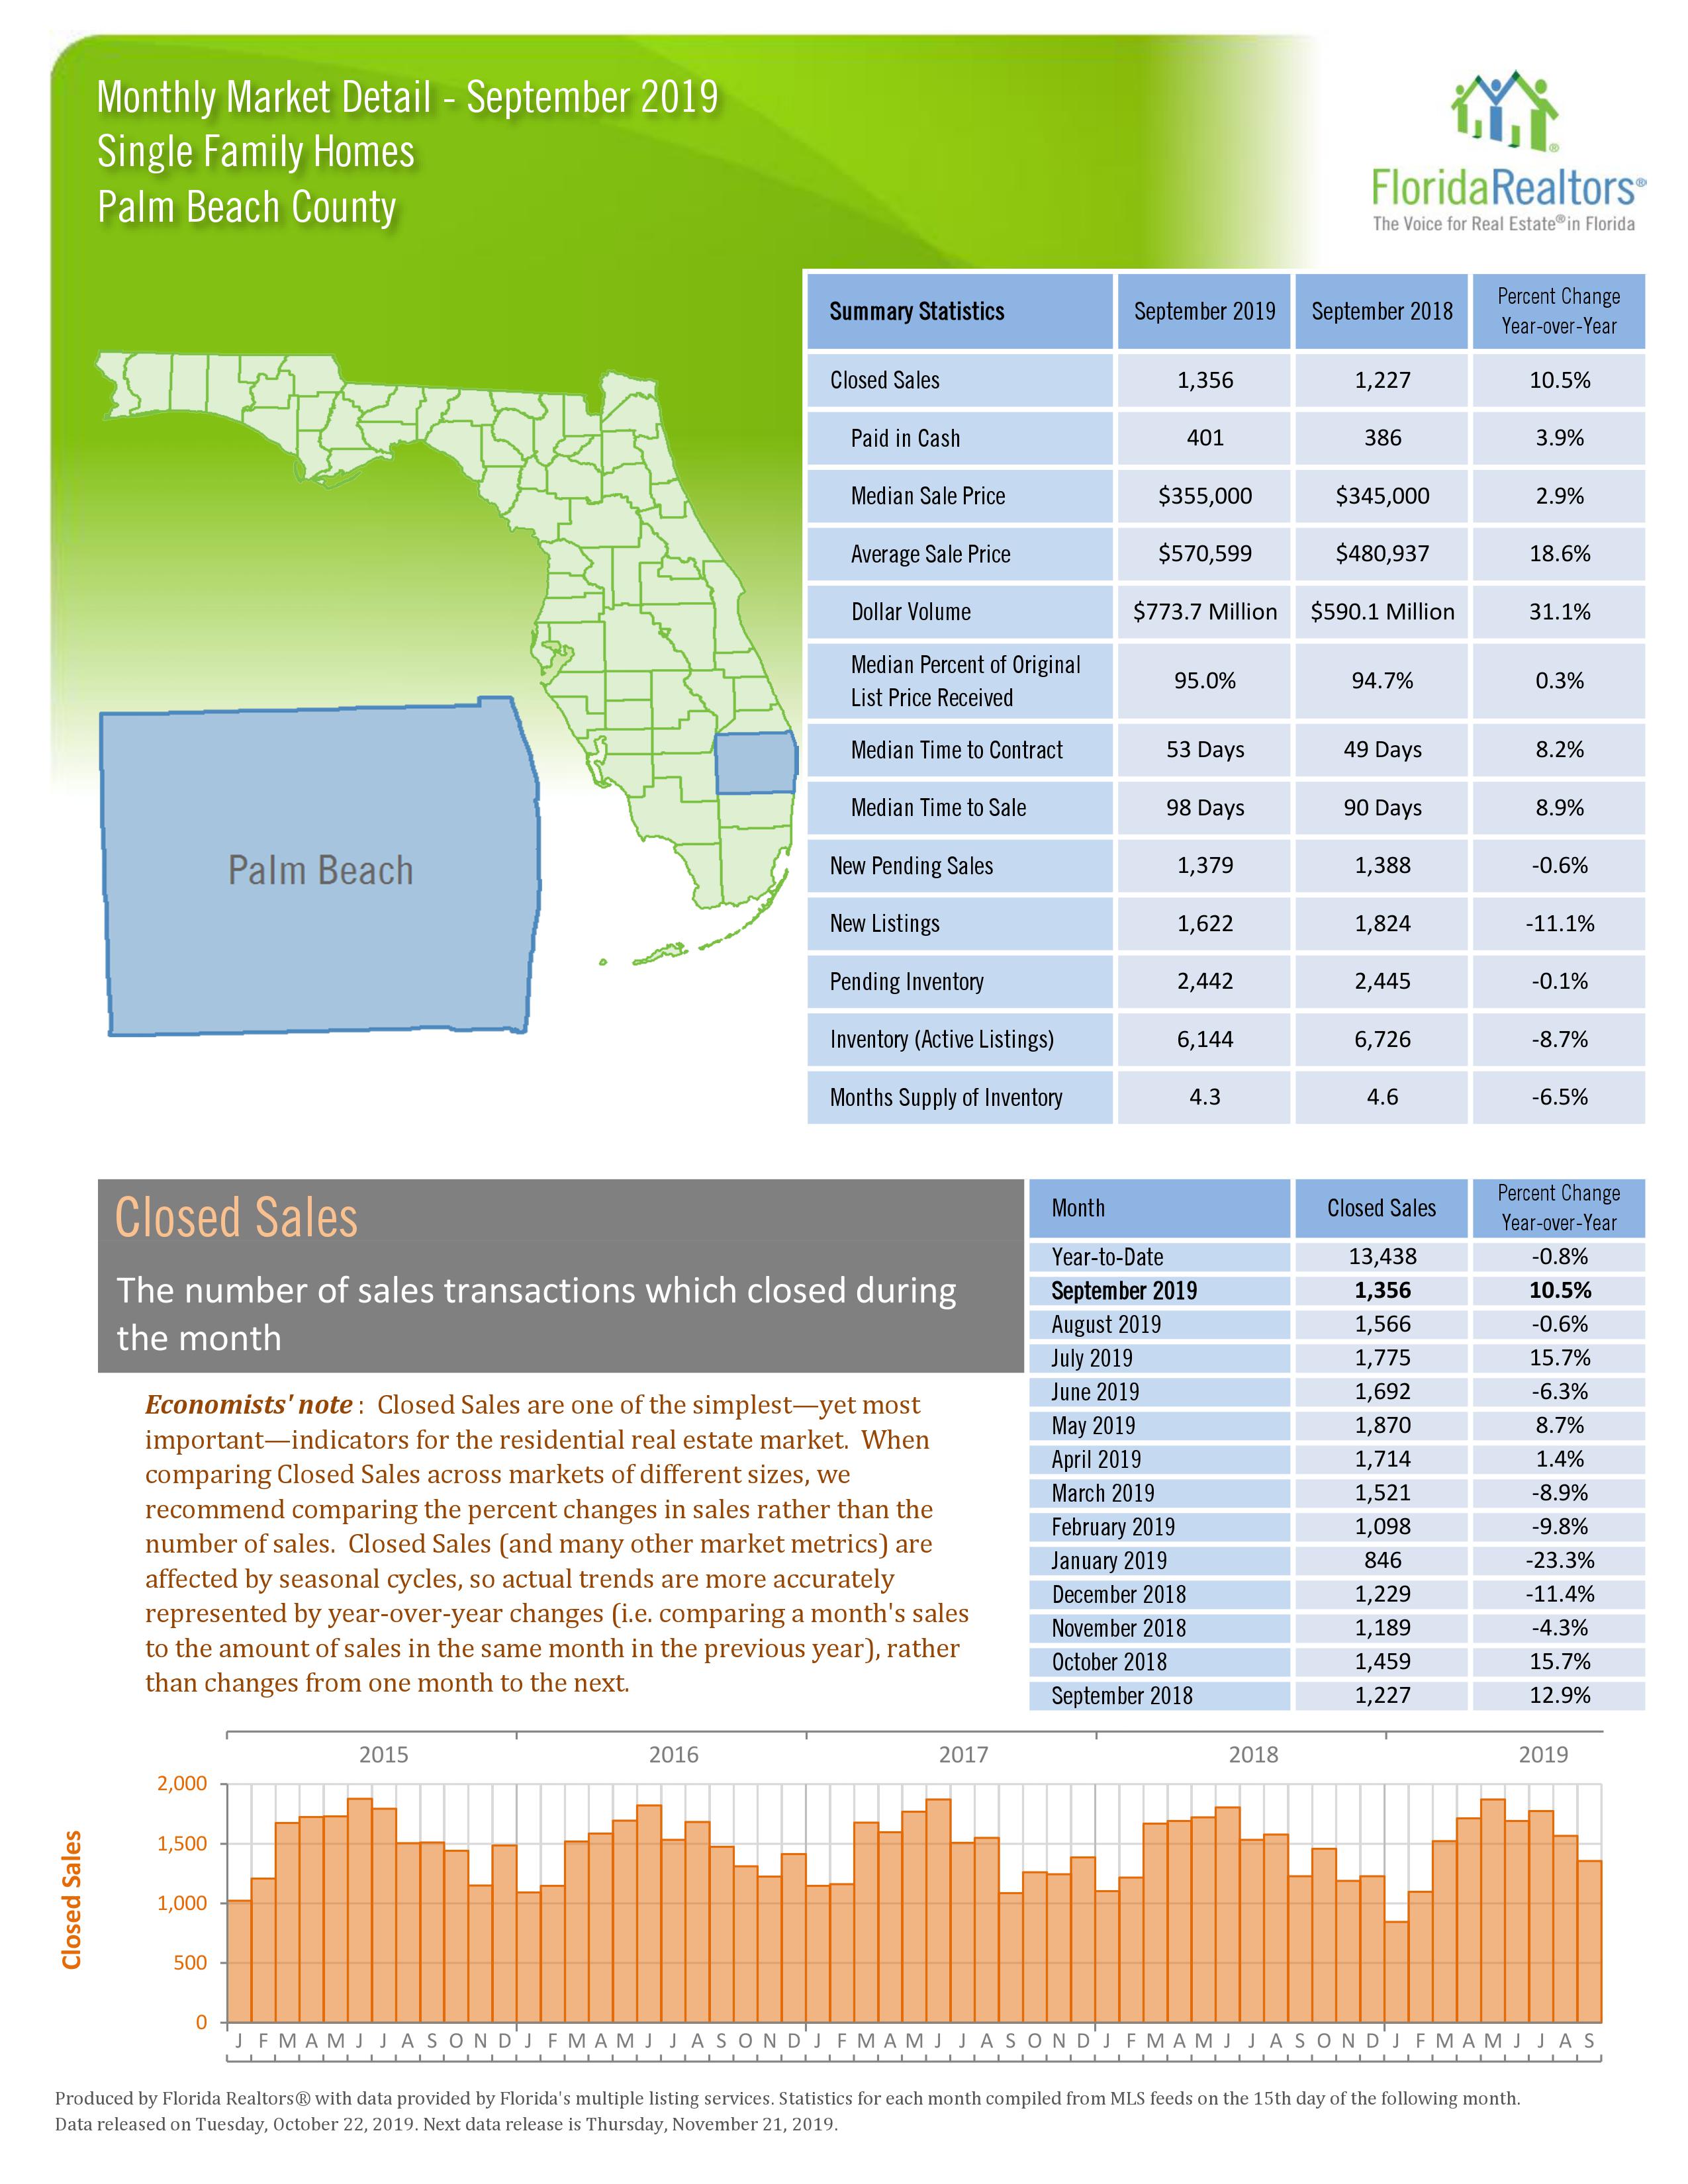 Palm Beach Statistics for September 2019